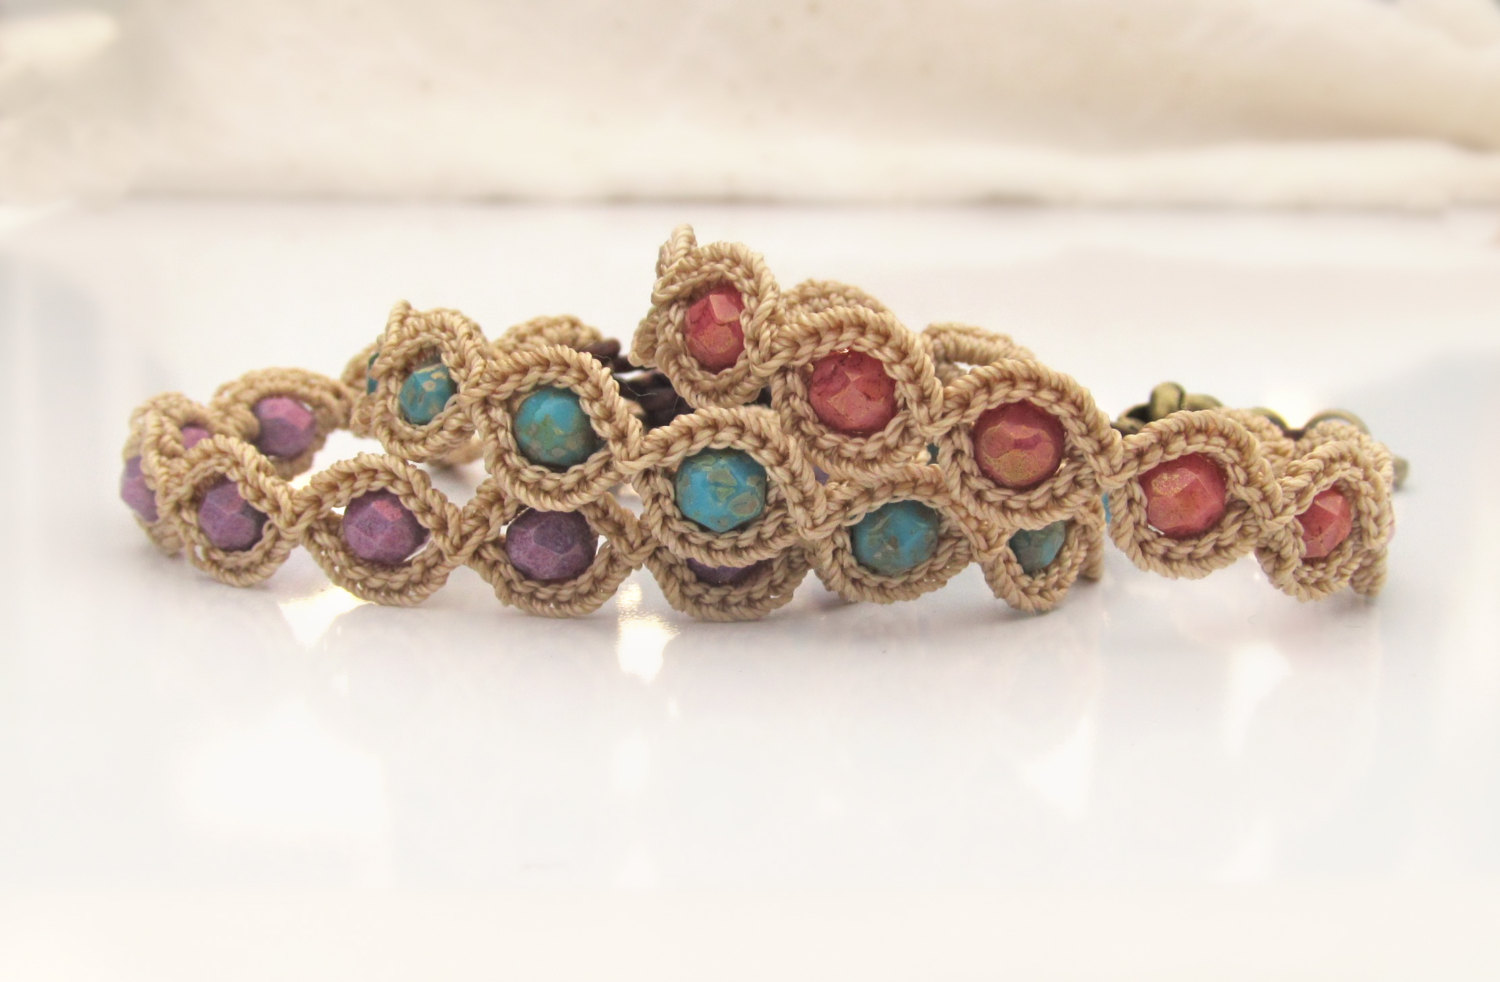 Crochet jewelry patterns: handmade style